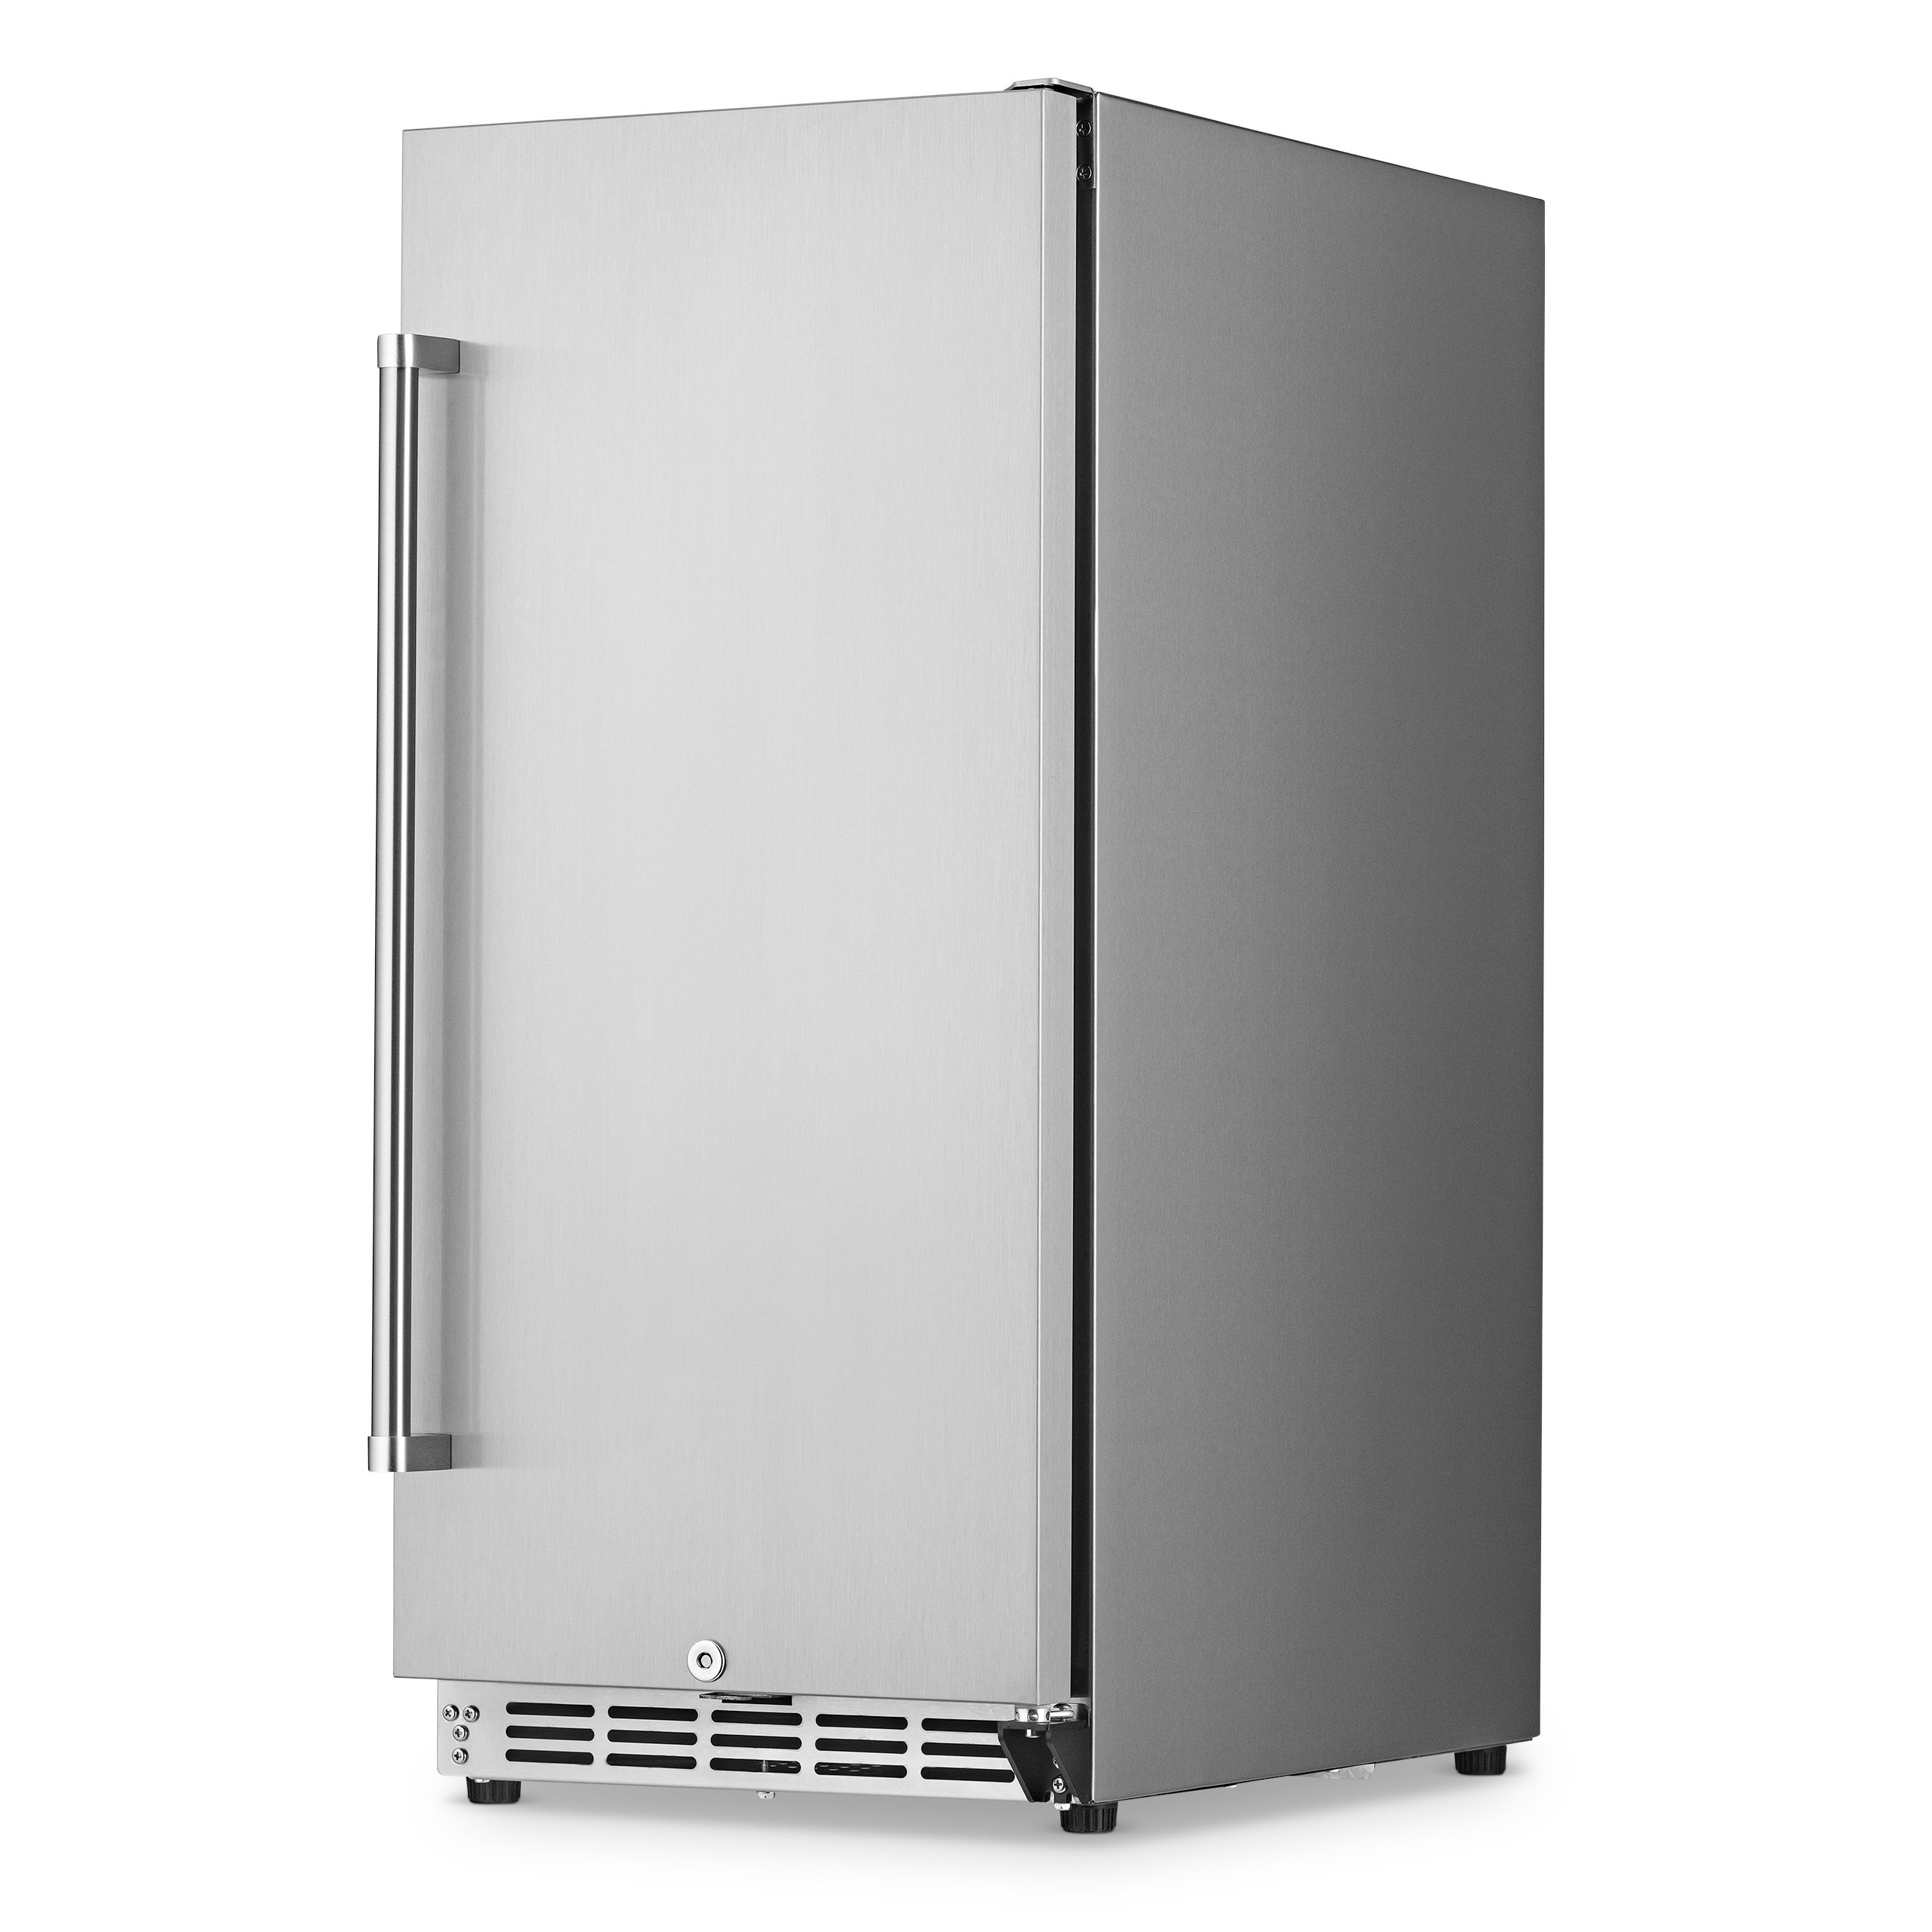 15 in. Small Stainless Steel, Glass-Door Built-In Refrigerator and Bev –  Koolmore